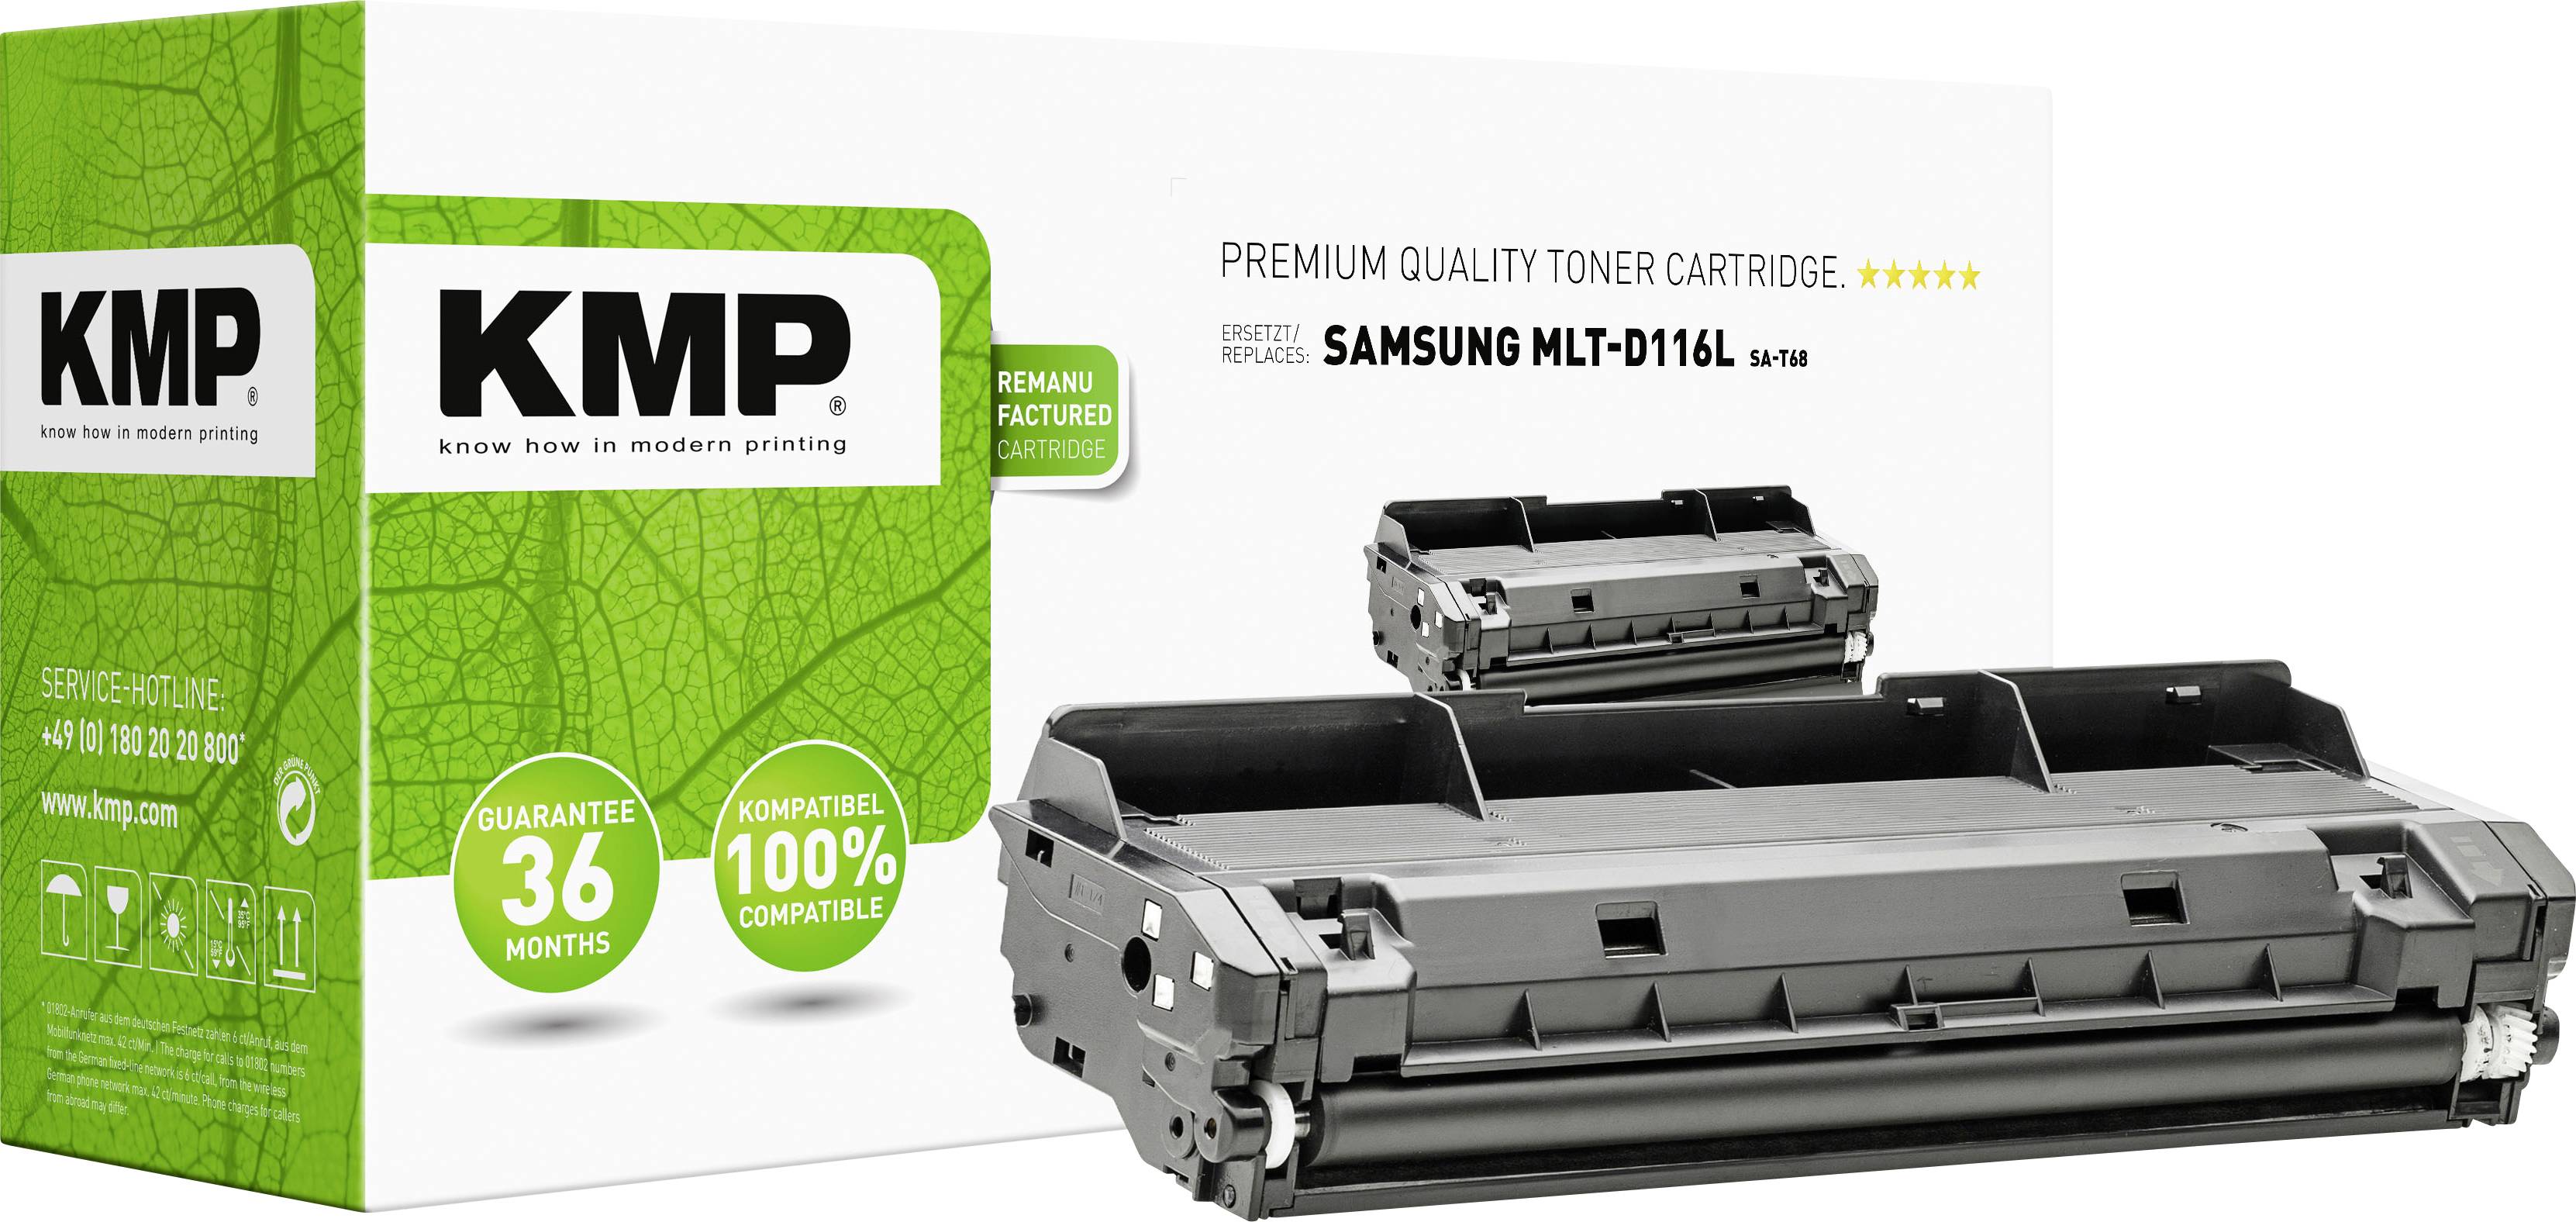 Matematisk maling blæk KMP Toner cartridge replaced Samsung MLT-D116S, MLT-D116L Compatible Black  3000 Sides SA-T68 | Conrad.com